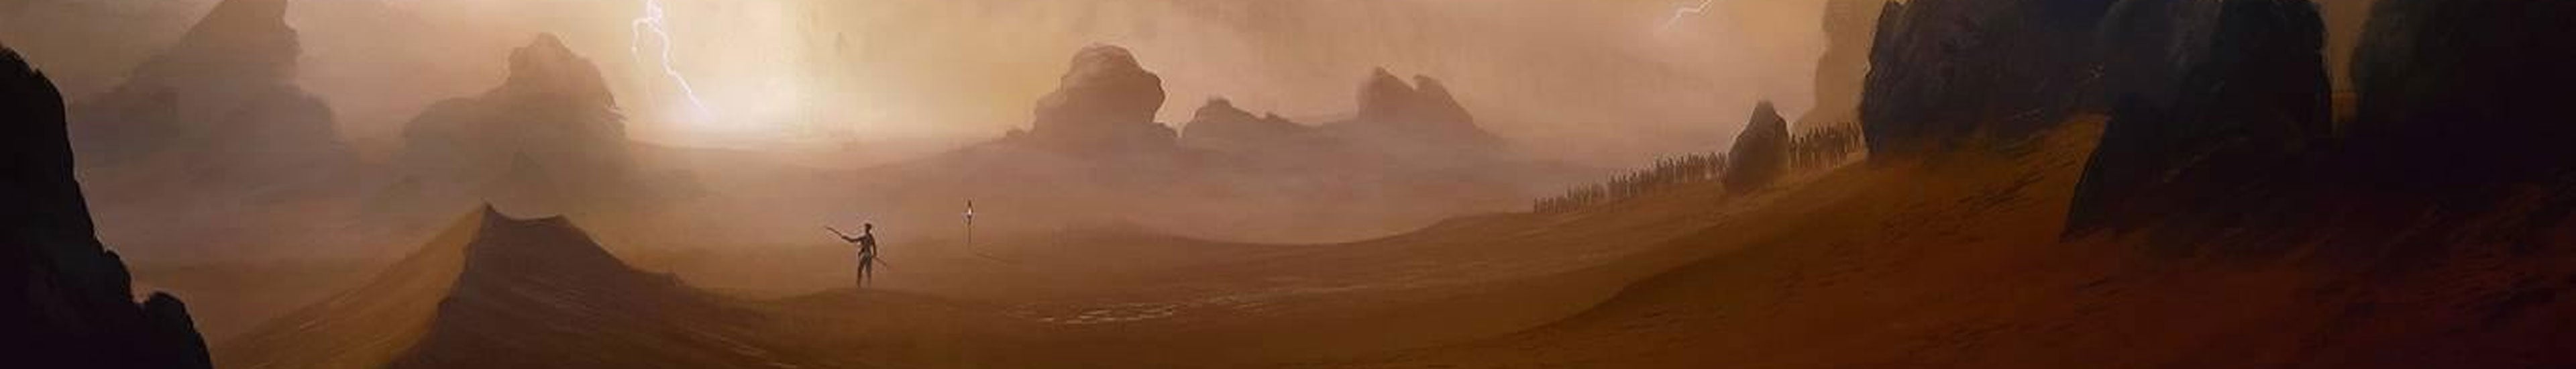 Dune 2021 Movie Landscape